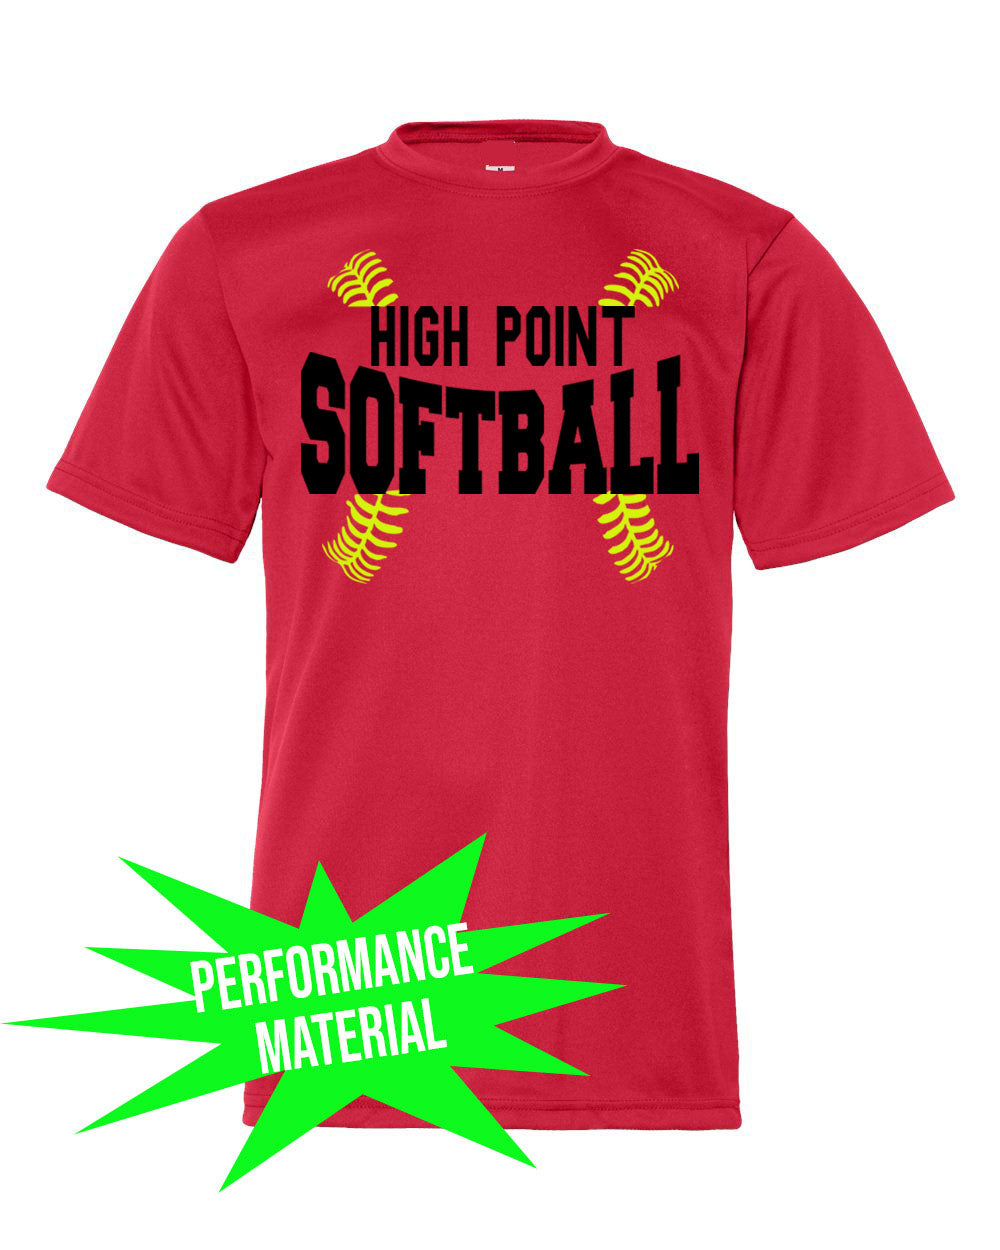 High Point Softball Performance Material design 1 T-Shirt